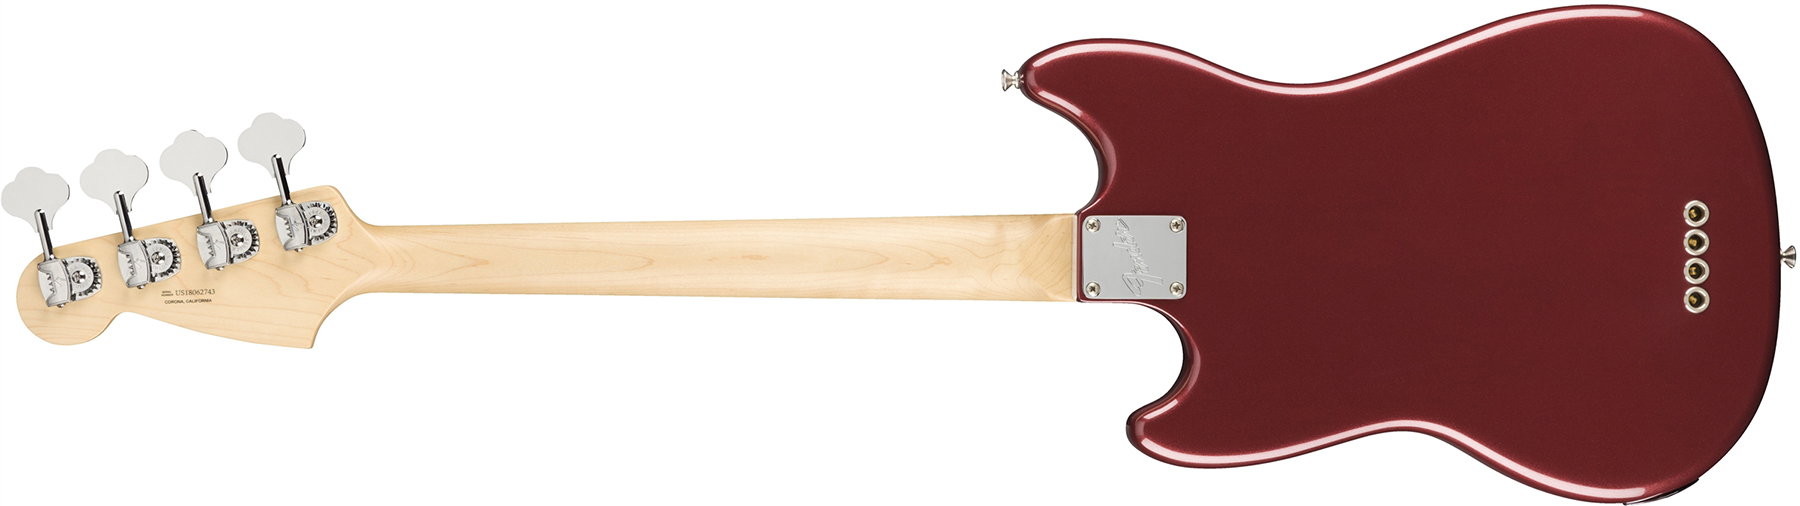 Fender Mustang Bass American Performer Usa Rw - Aubergine - Short scale elektrische bas - Variation 1